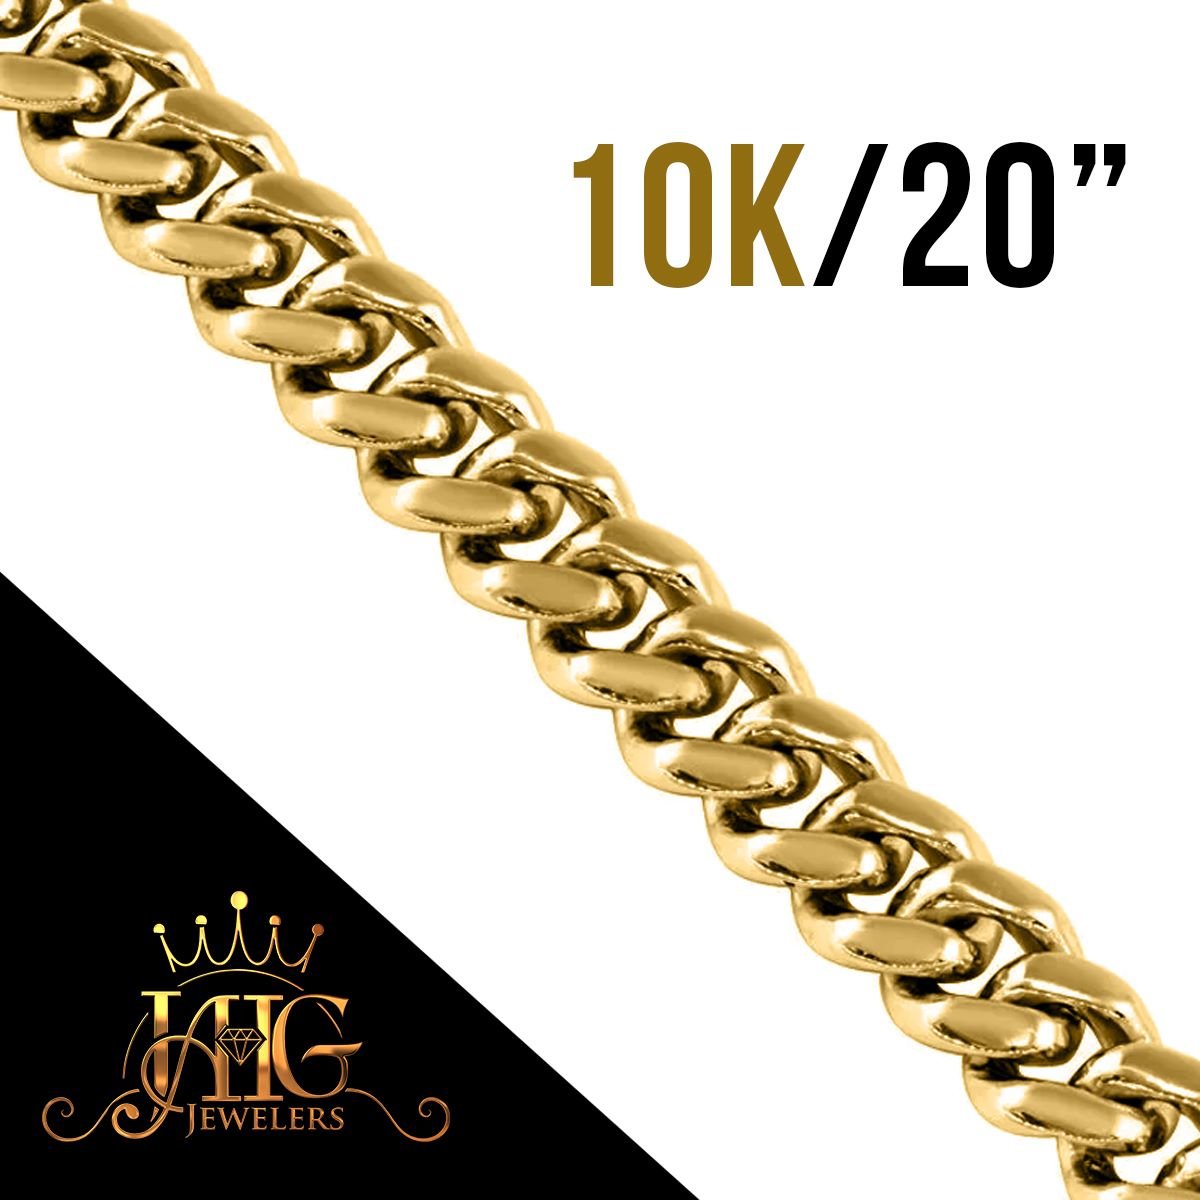 Cuban Link Gold Chain – 10K/20"